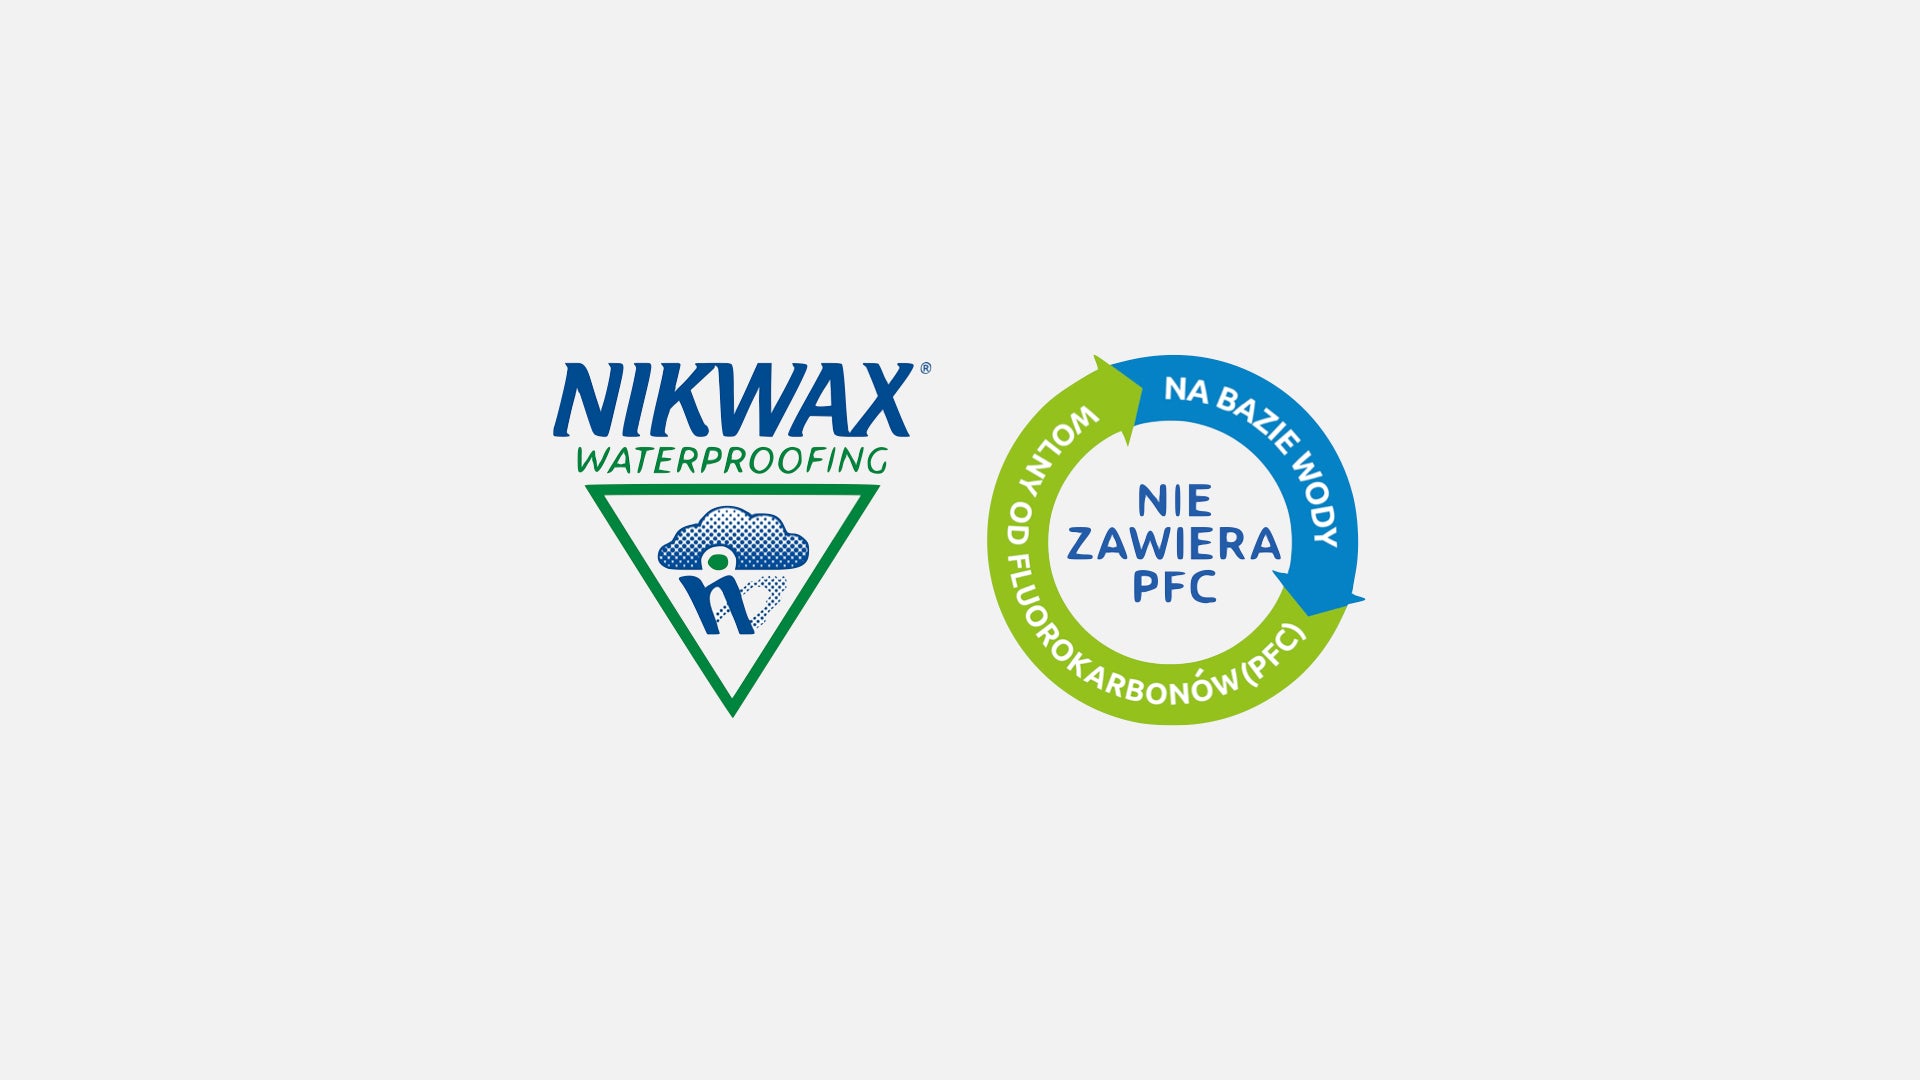 Nikwax - Tech Wash® membrane laundry detergent 300ml